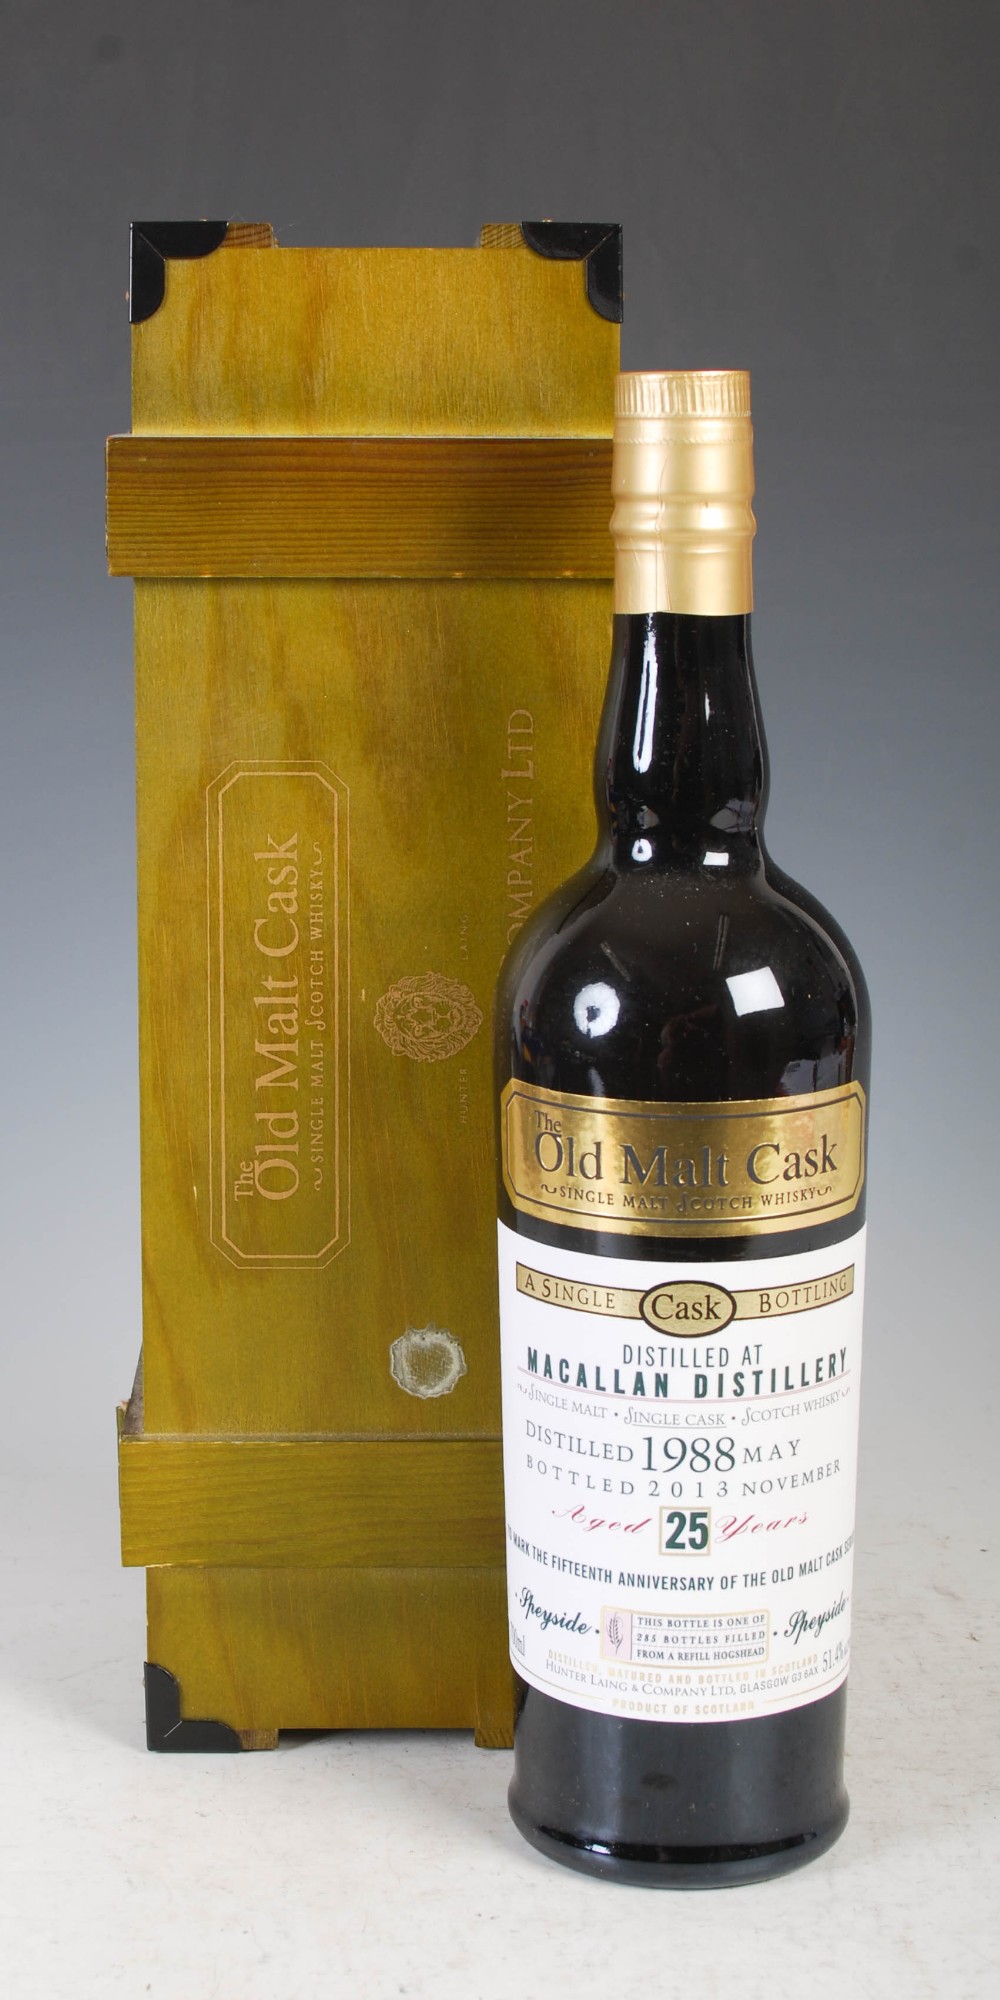 A boxed bottle of The Old Malt Cask, Single Malt Scotch Whisky, A Single Cask Bottling Distilled